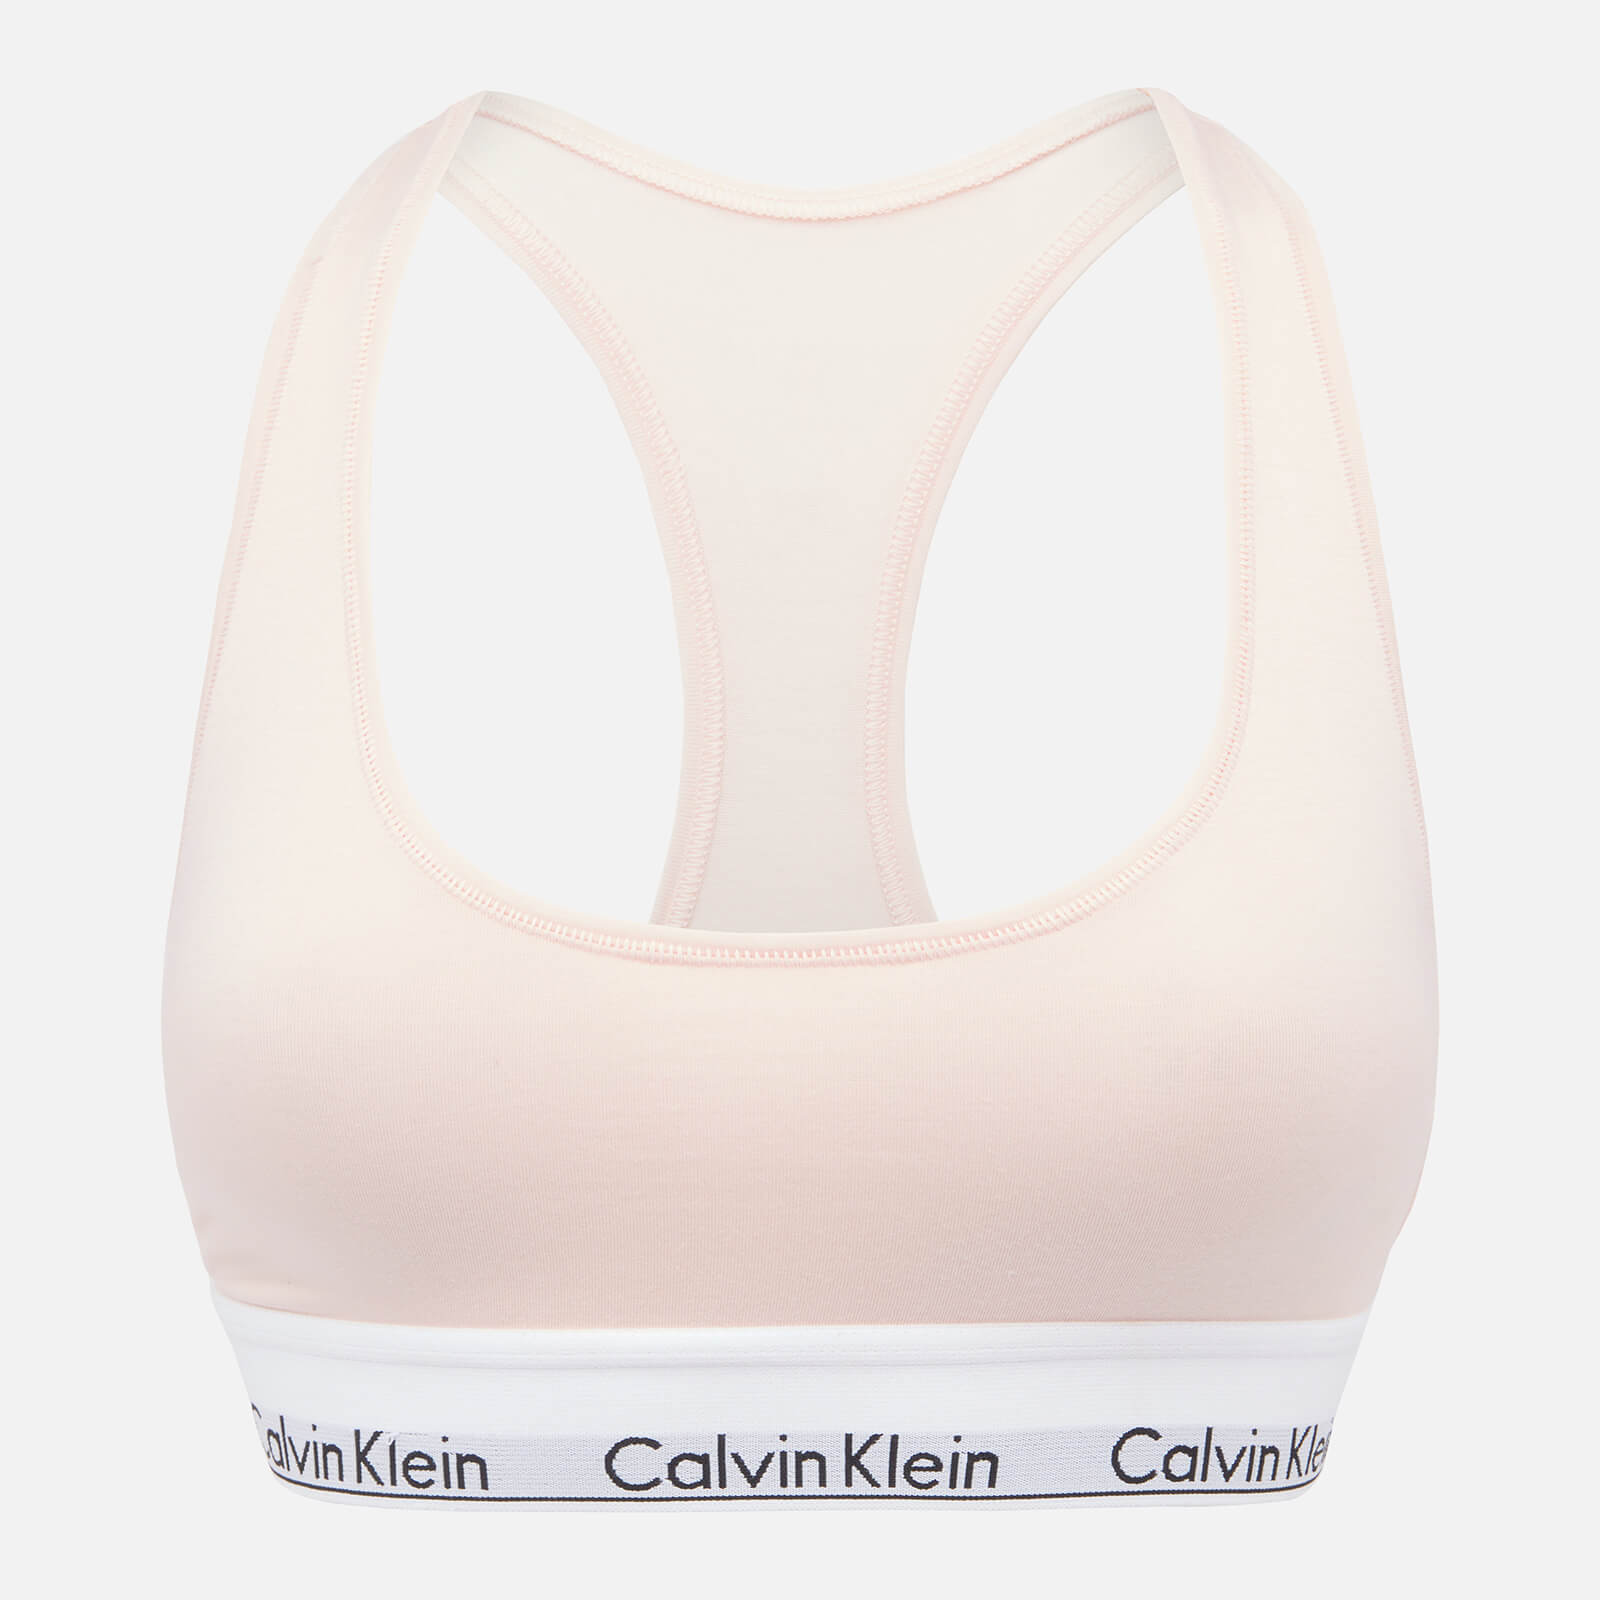 Calvin Klein Women's Modern Cotton Bralette - Nymphs Pink - XS